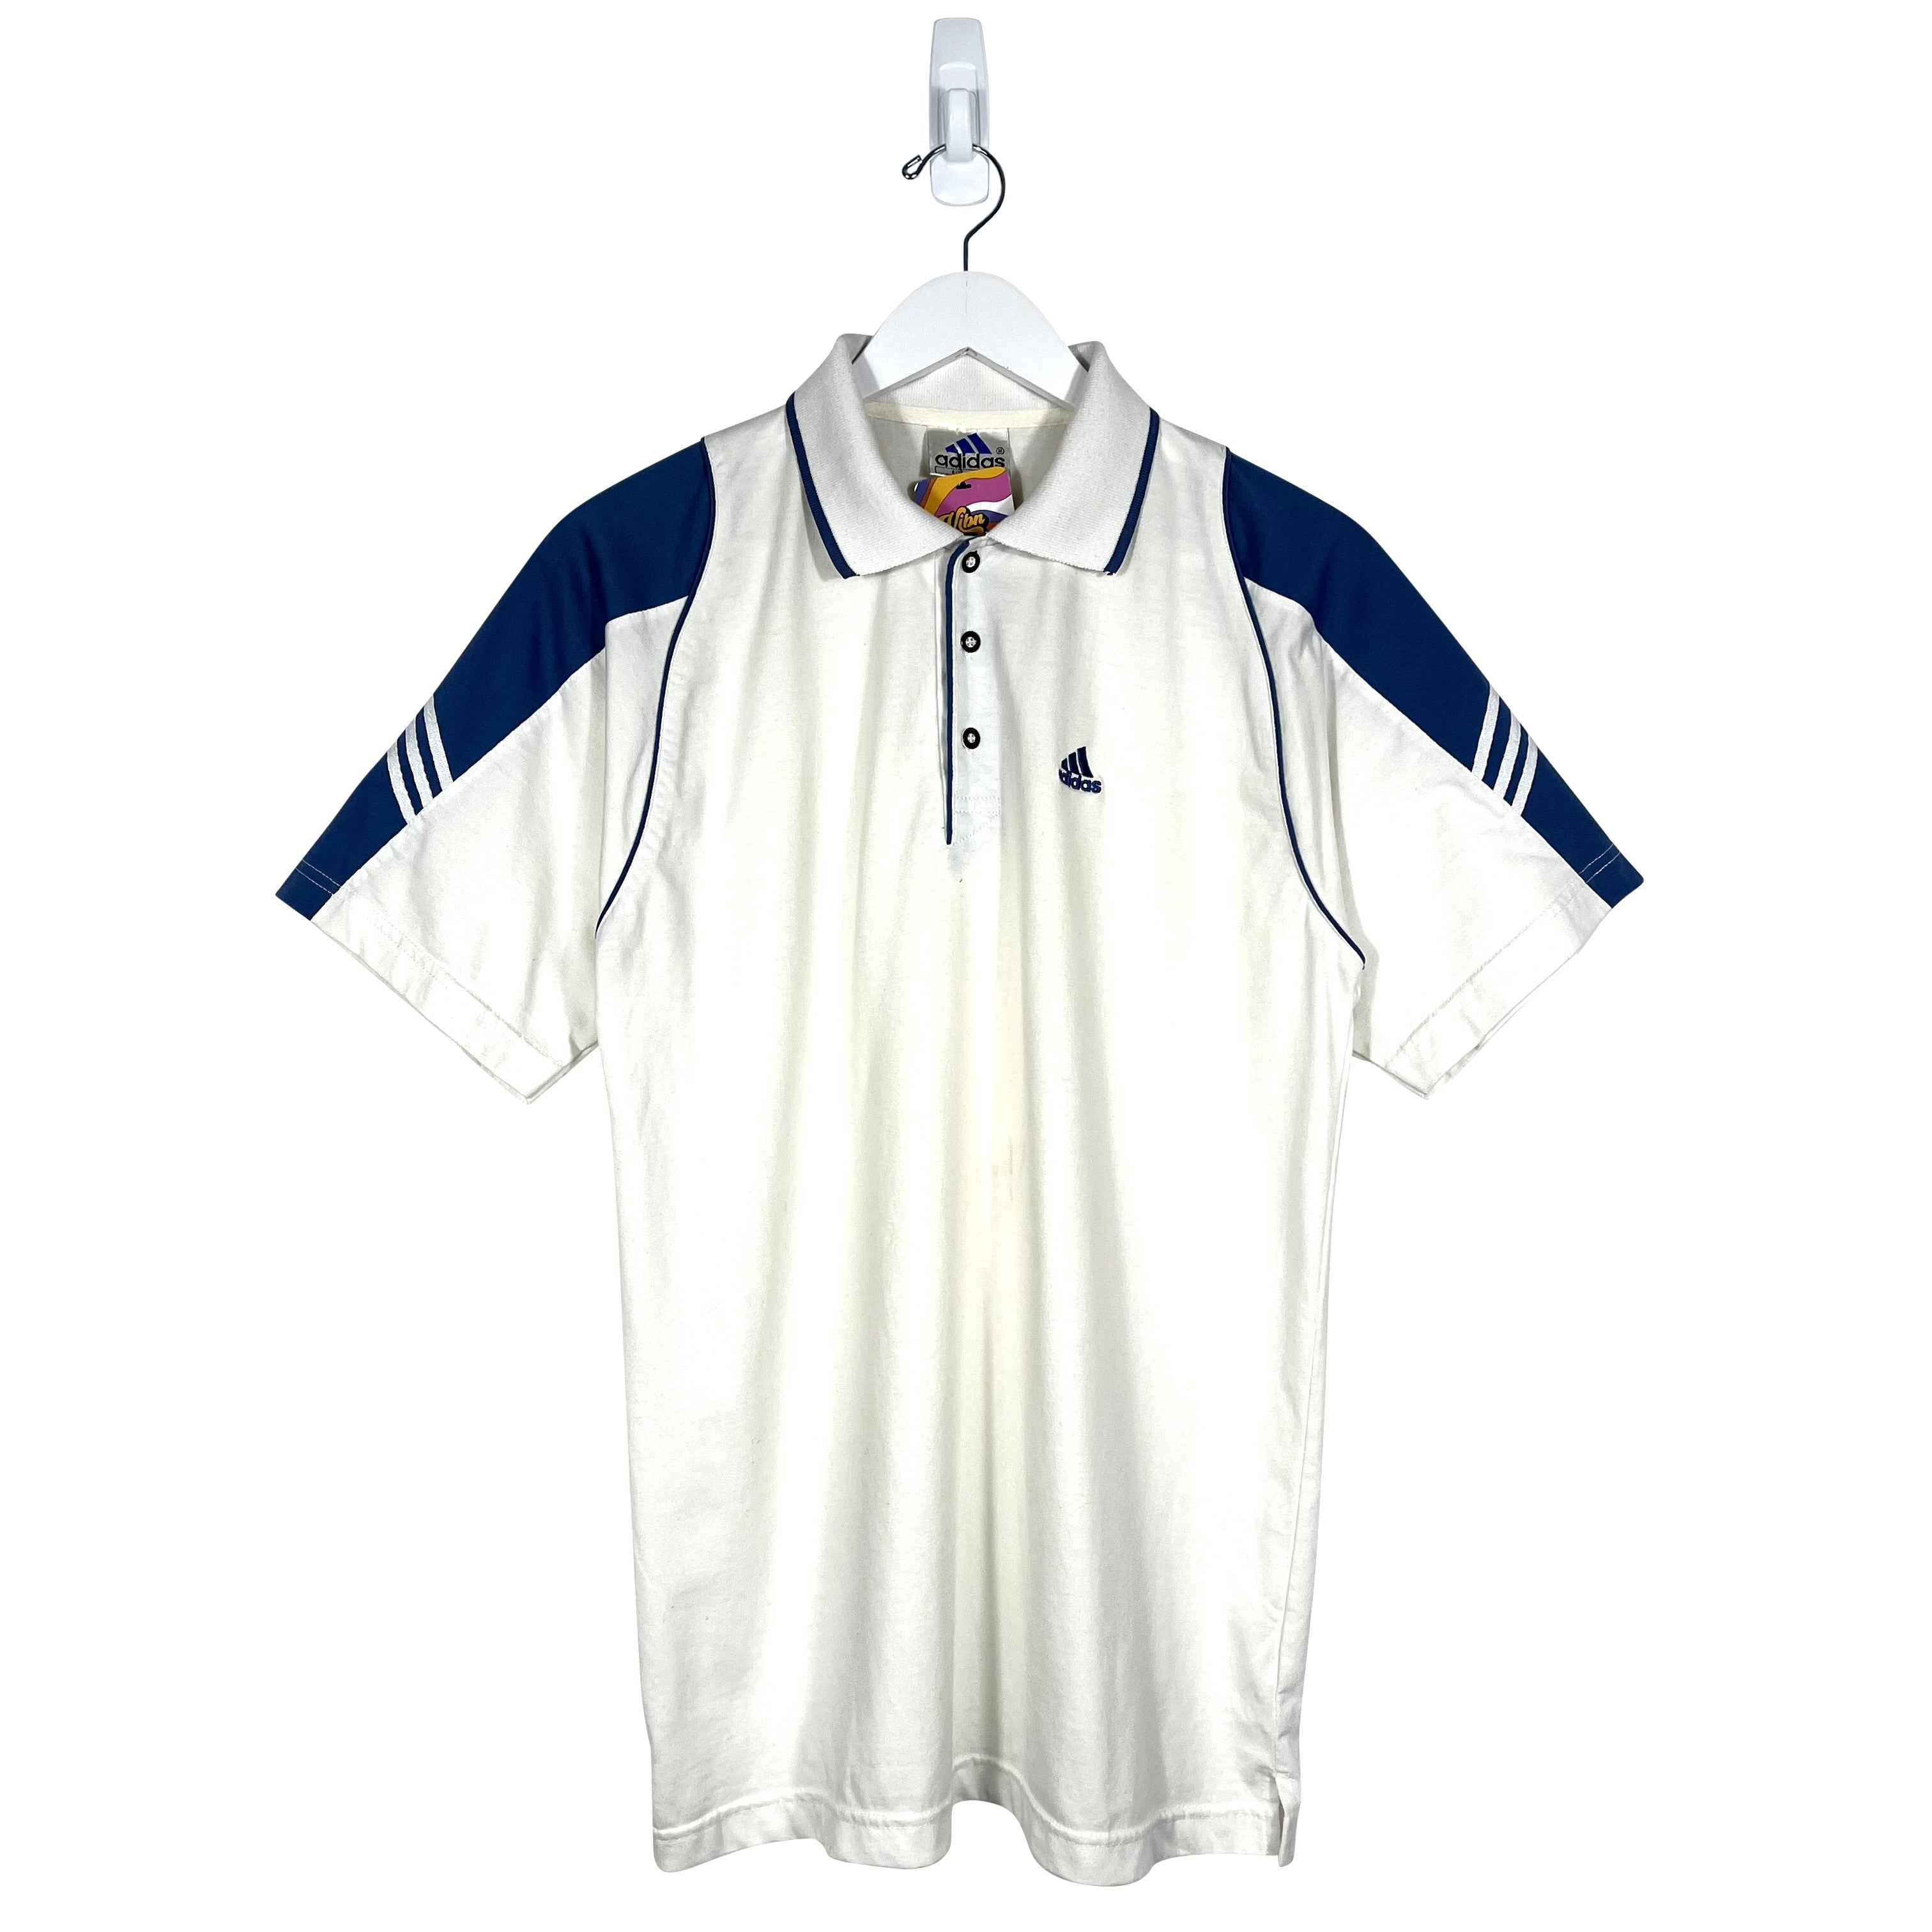 Vintage Adidas Collared Polo Shirt - Men's Medium